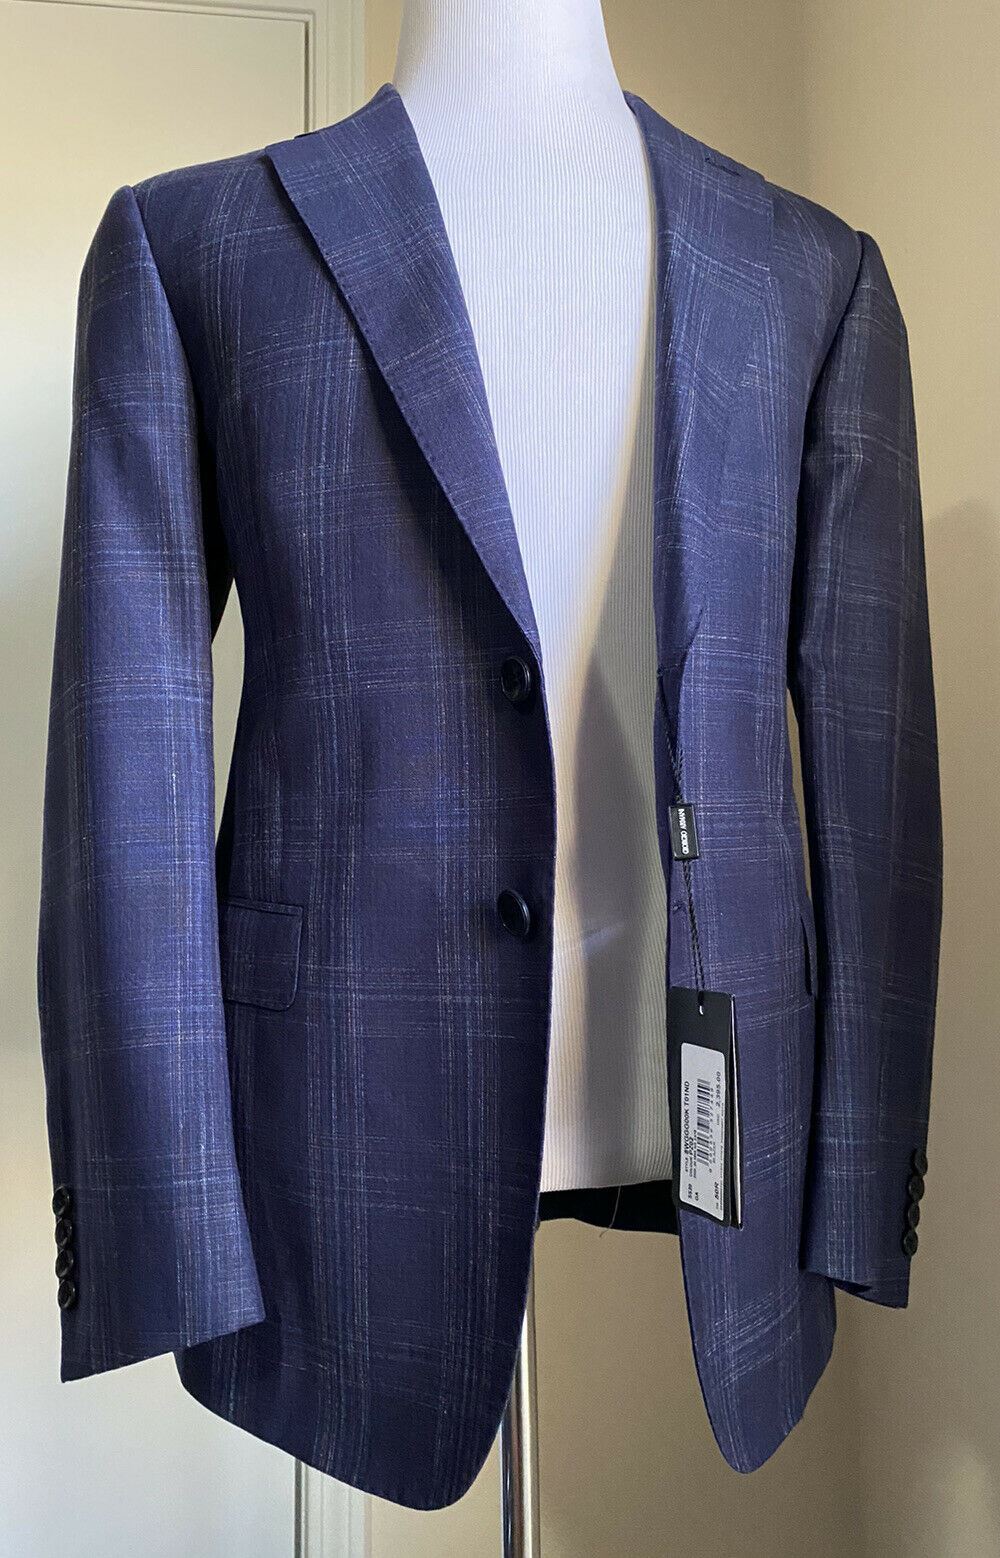 NWT $2395 Giorgio Armani Men Sport Coat Jacket Blazer DK Blue 40R US/50R Eu